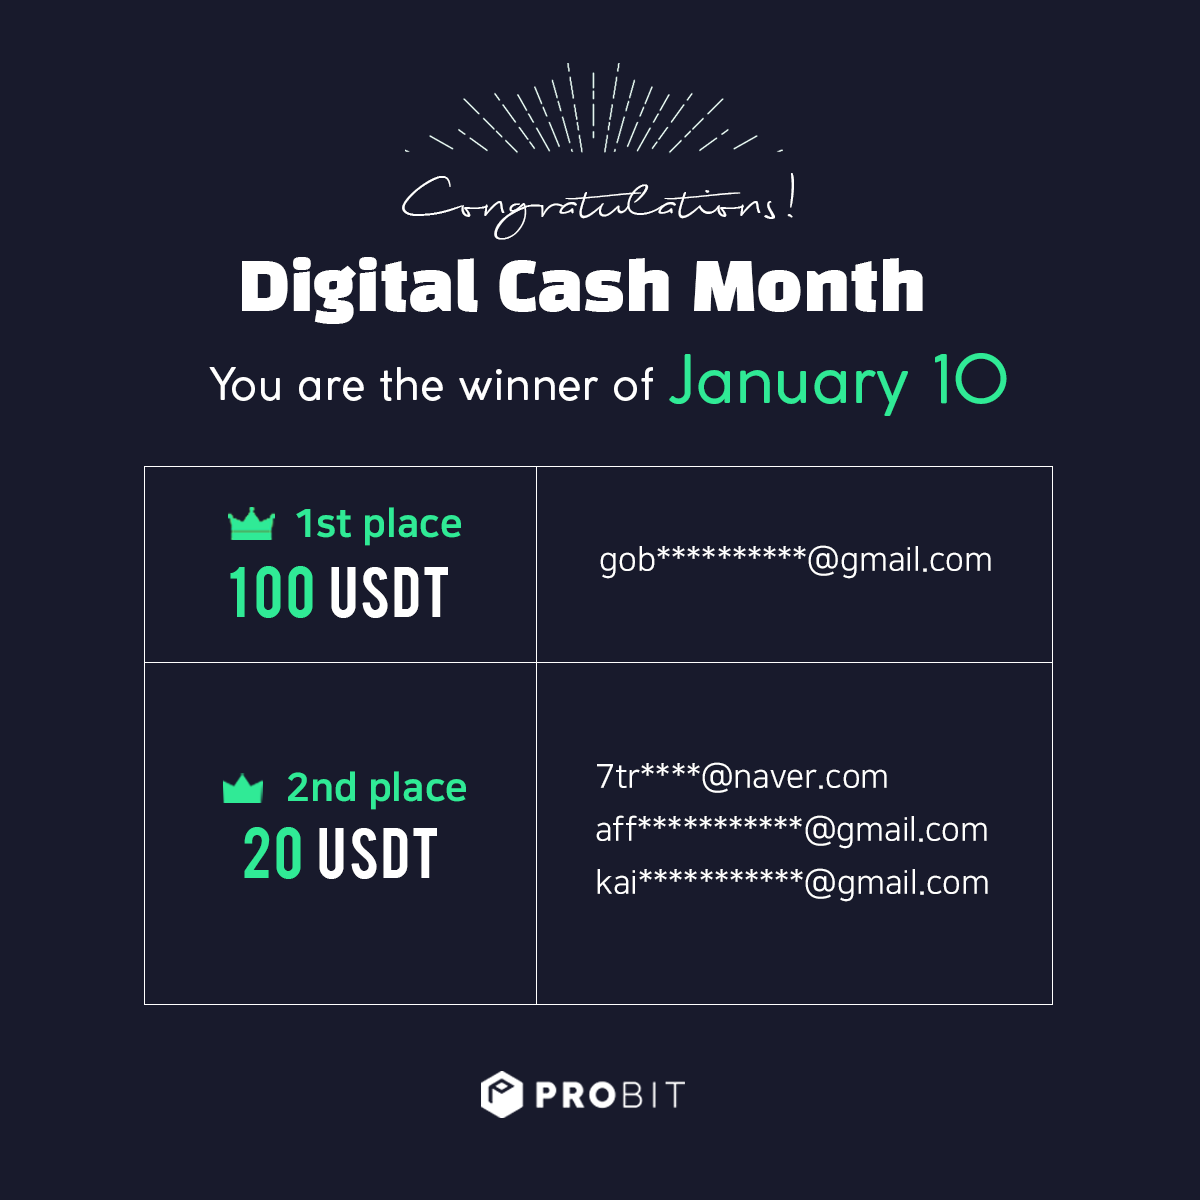 digital_cash_month_winner_en_190110.png